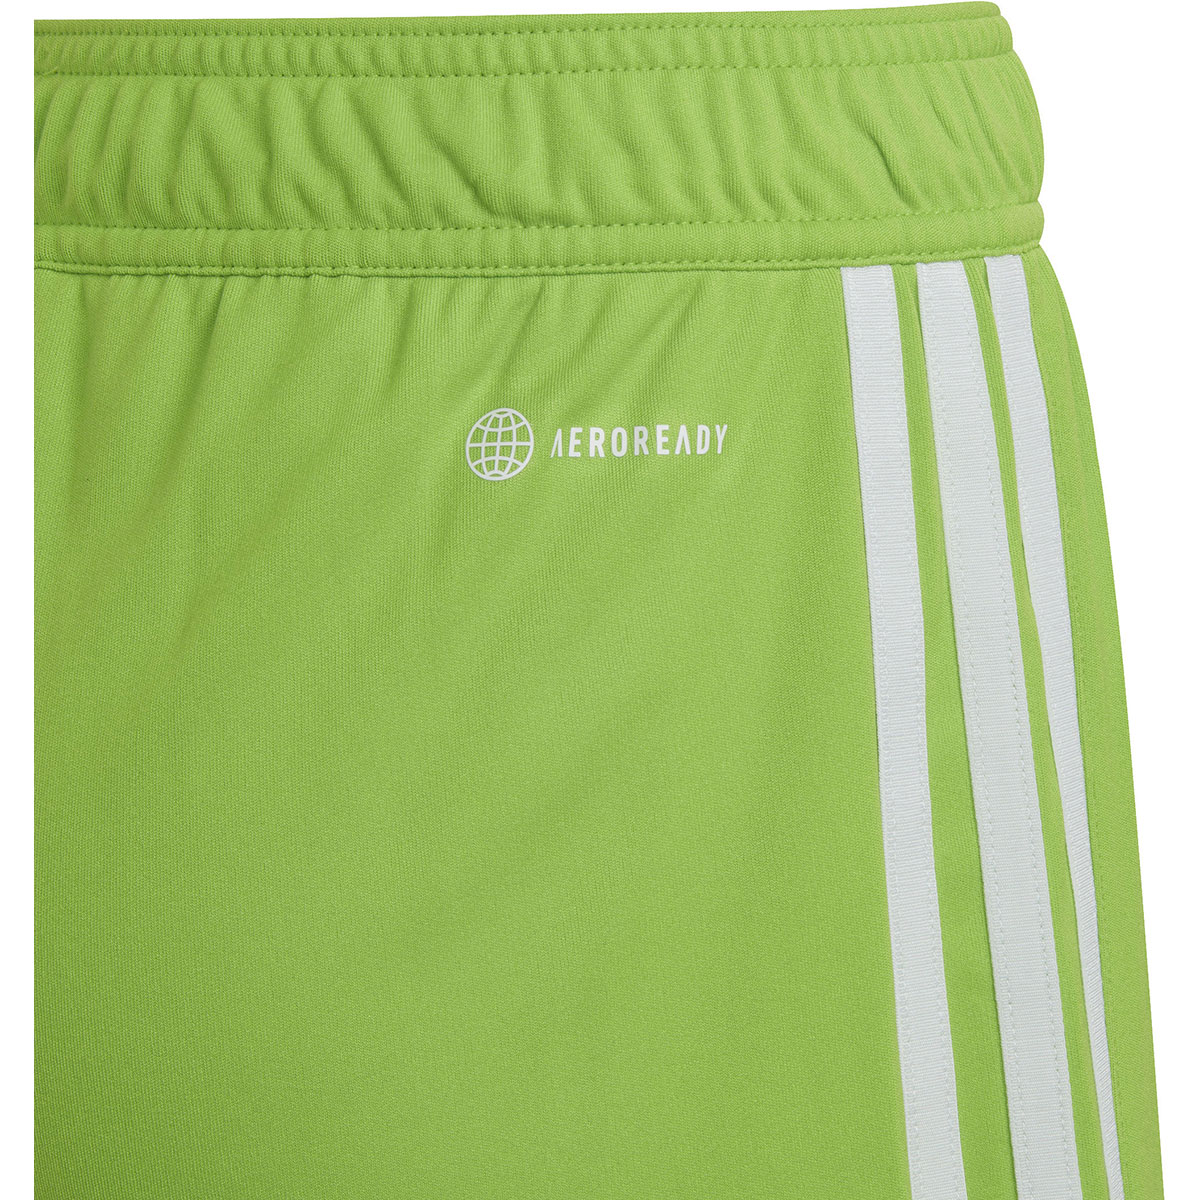 Adidas Kinder Shorts Tiro 23 grün-weiß